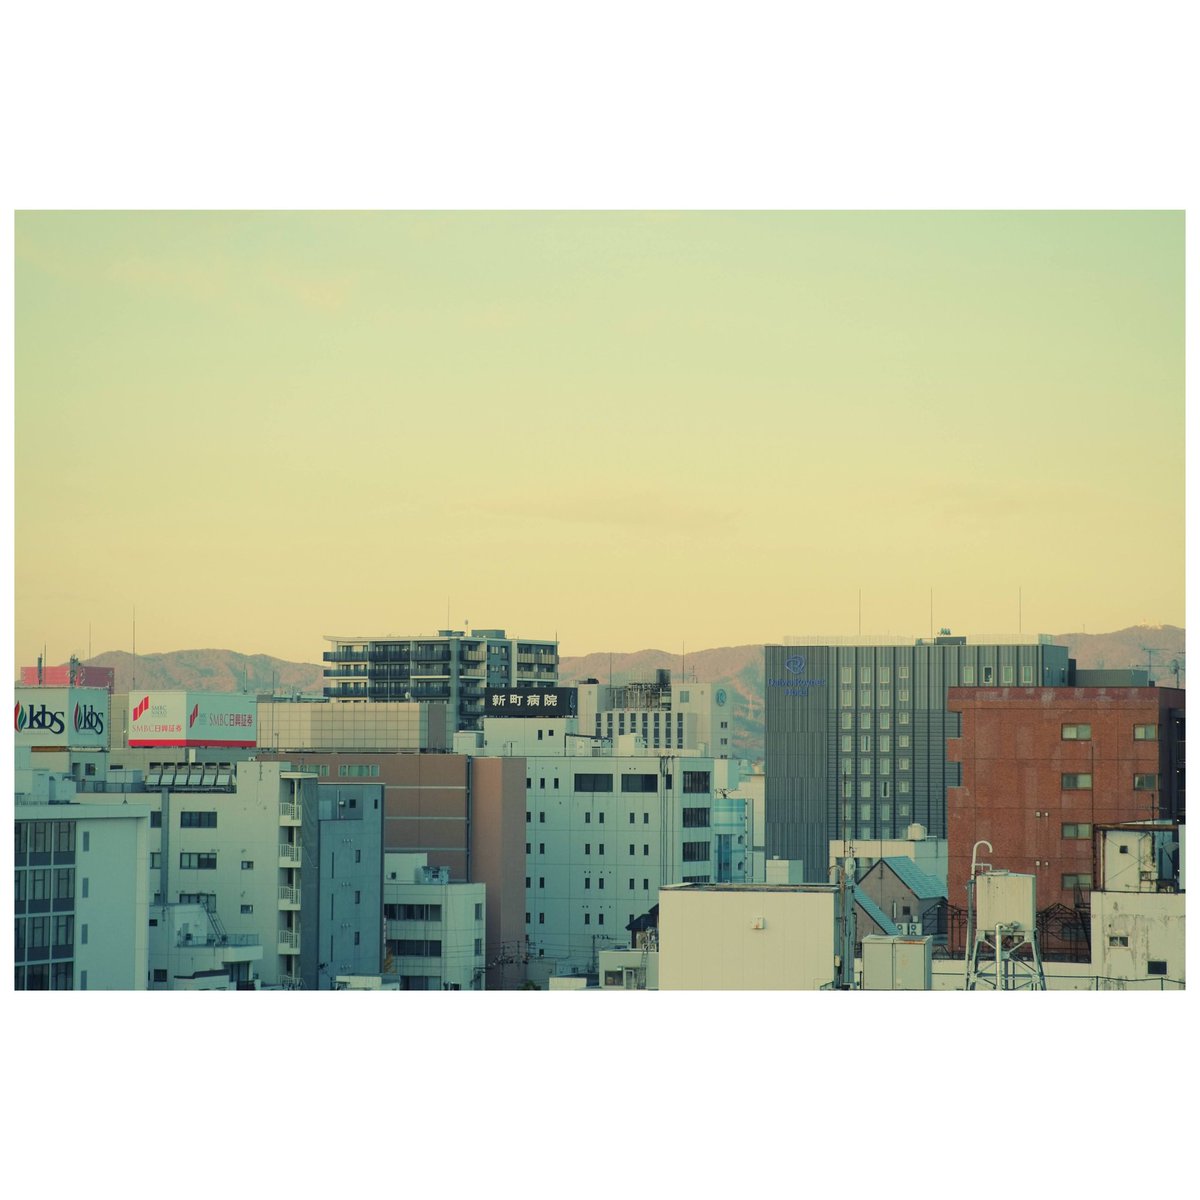 Good Morning, Aomori

----------------------

#fujifilm #fujifilm_us #fujifilm_japan #fujifilmxseries #fujifilmxpro1 #photography #japan #aomori #japantrip #travel #scenery #city #cityscape #urban #horizon #morning #hotelwithaview